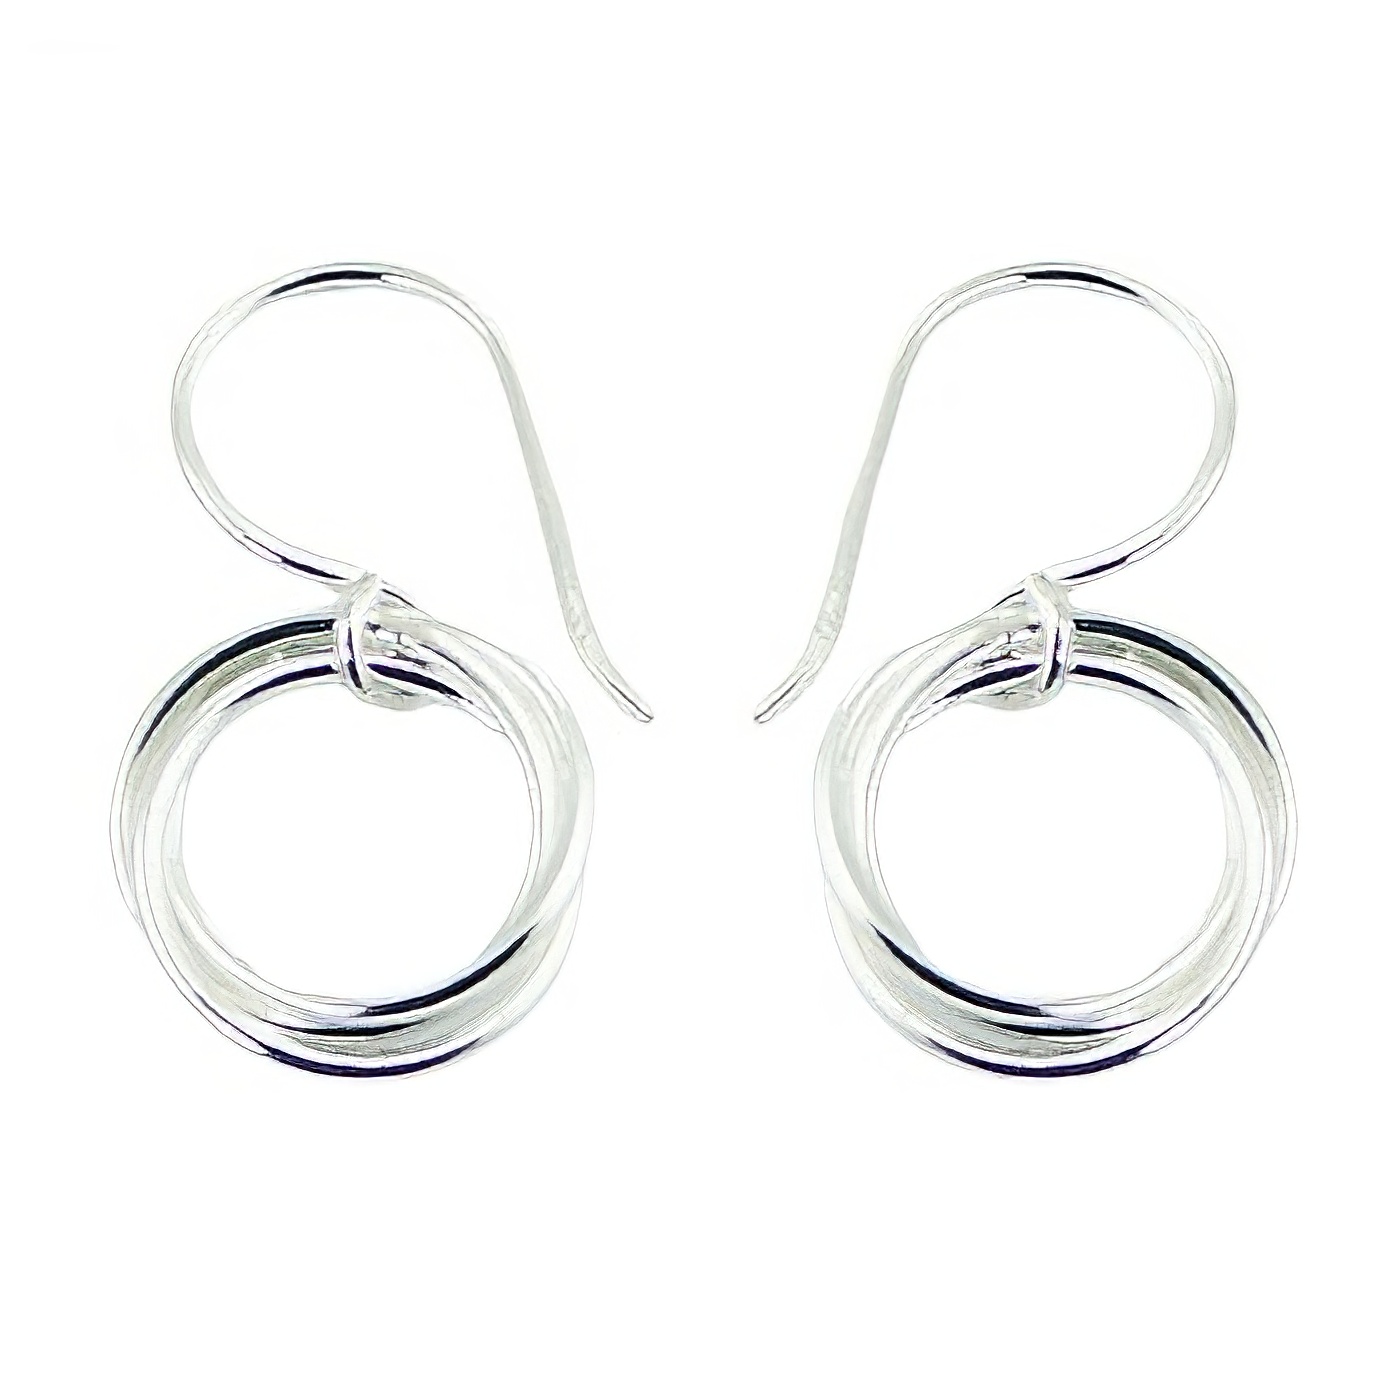 Intertwined Wirework Dangle Earrings in Sterling Silver by BeYindi 